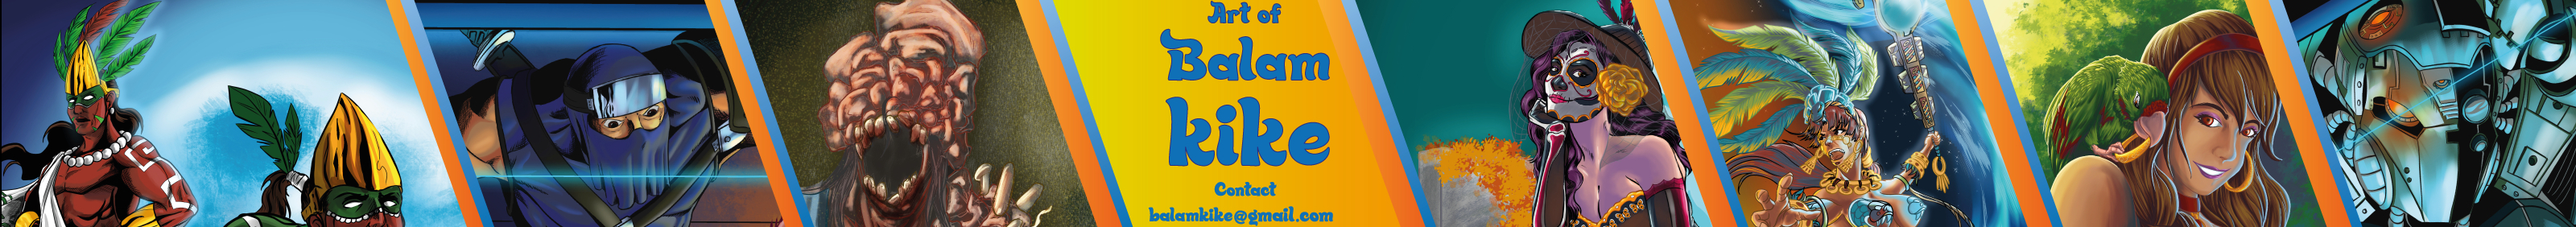 Banner profilu uživatele Balam Kike